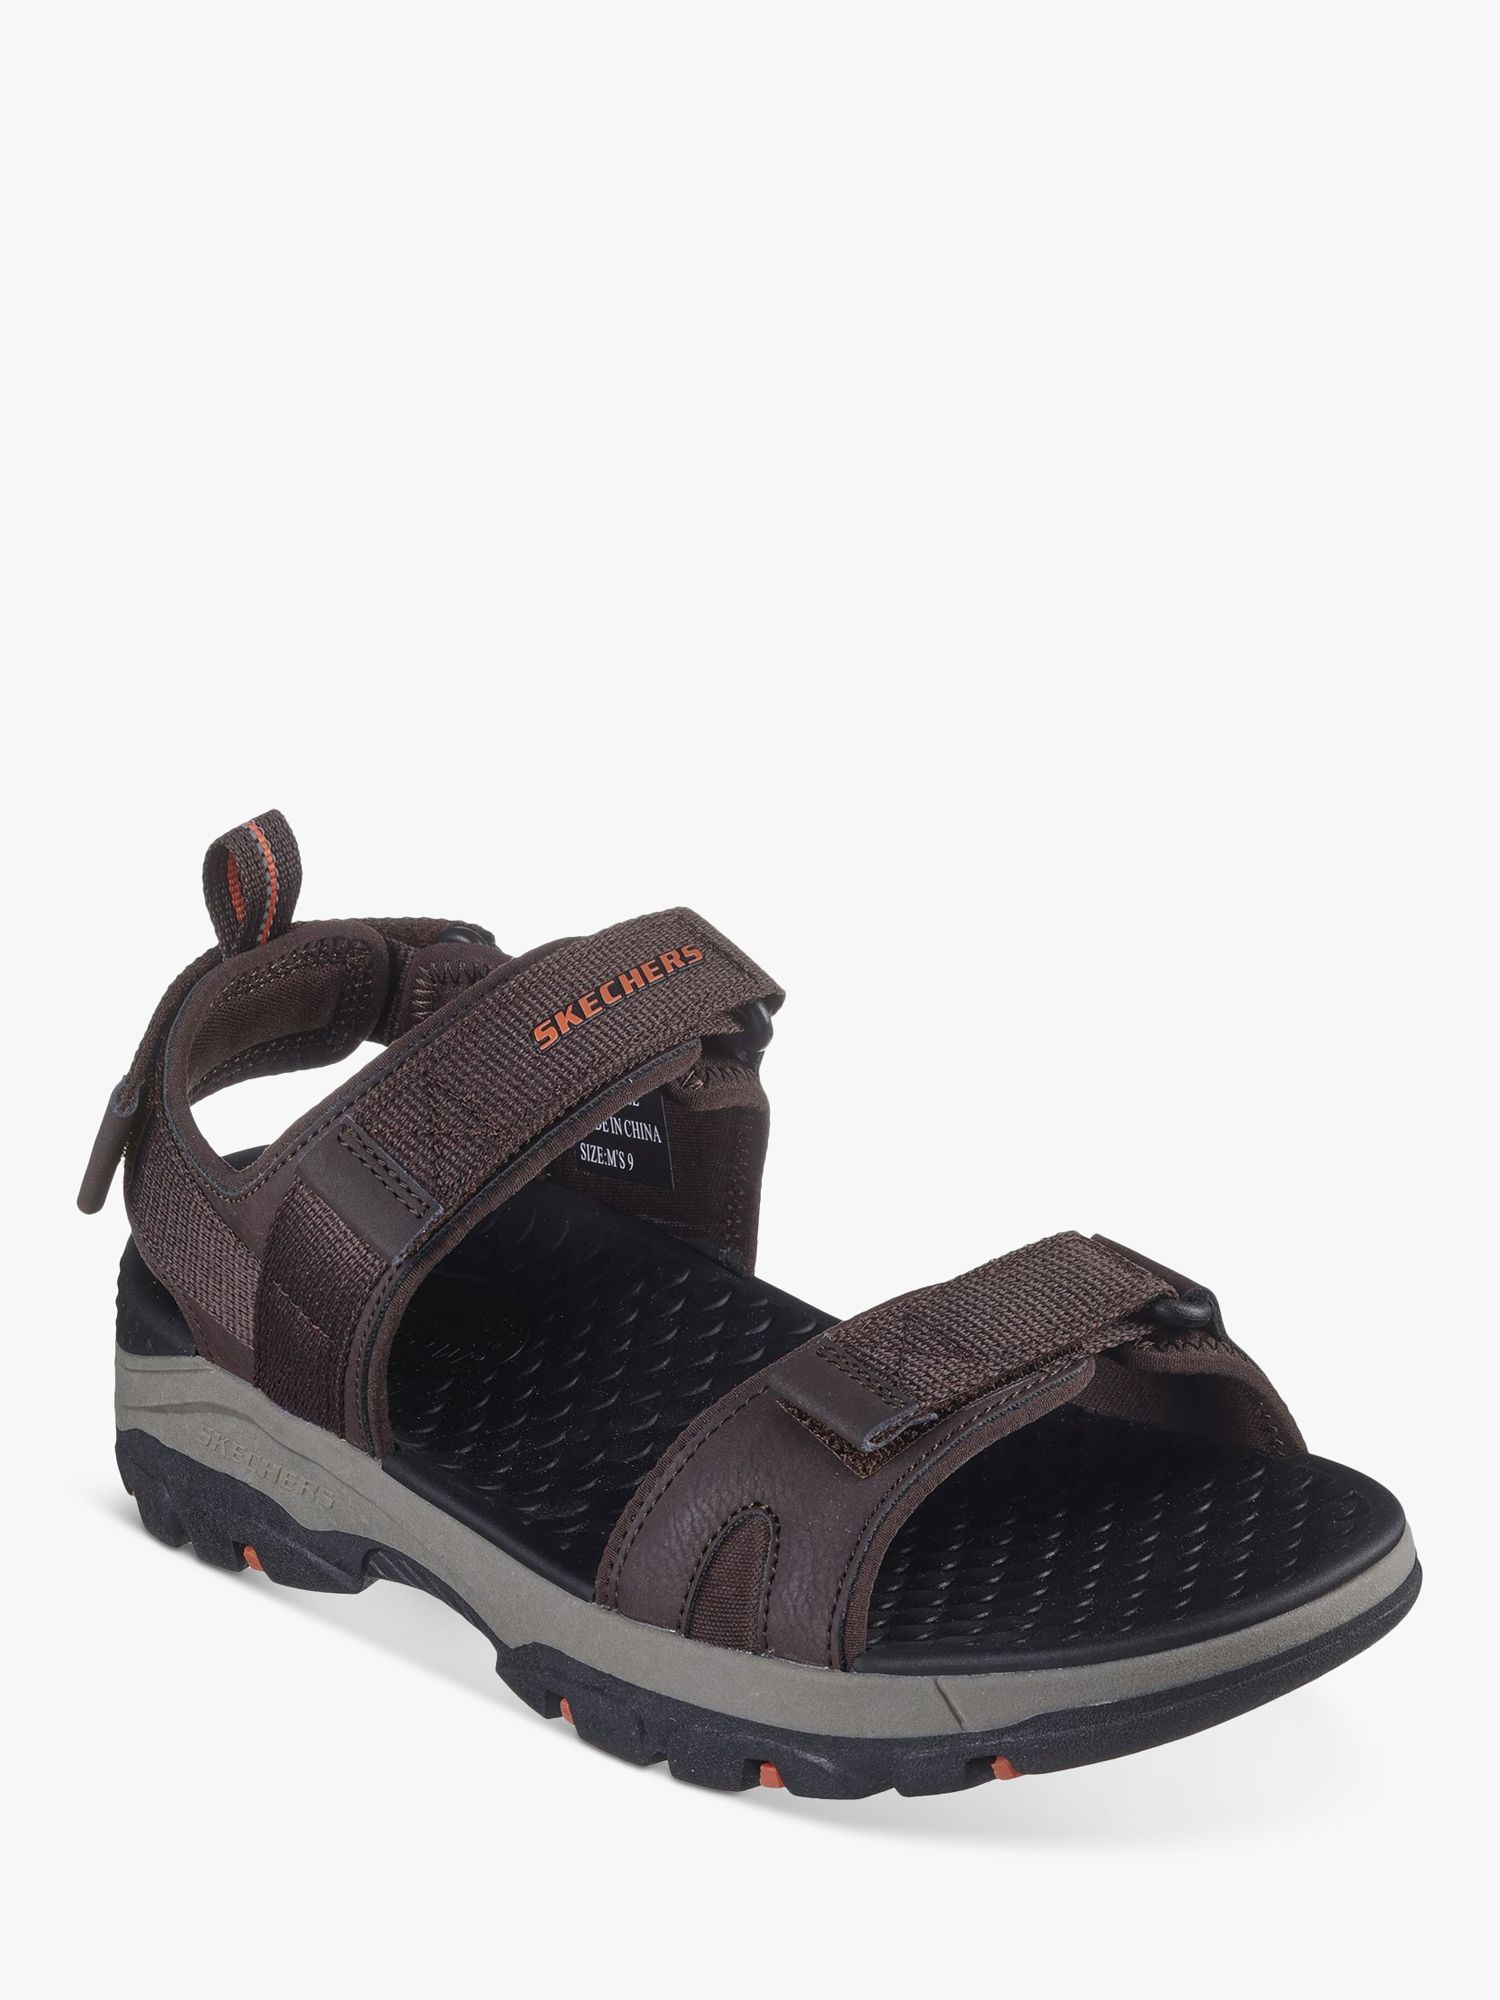 Buy Skechers Tresmen Ryer Sandals Online at johnlewis.com